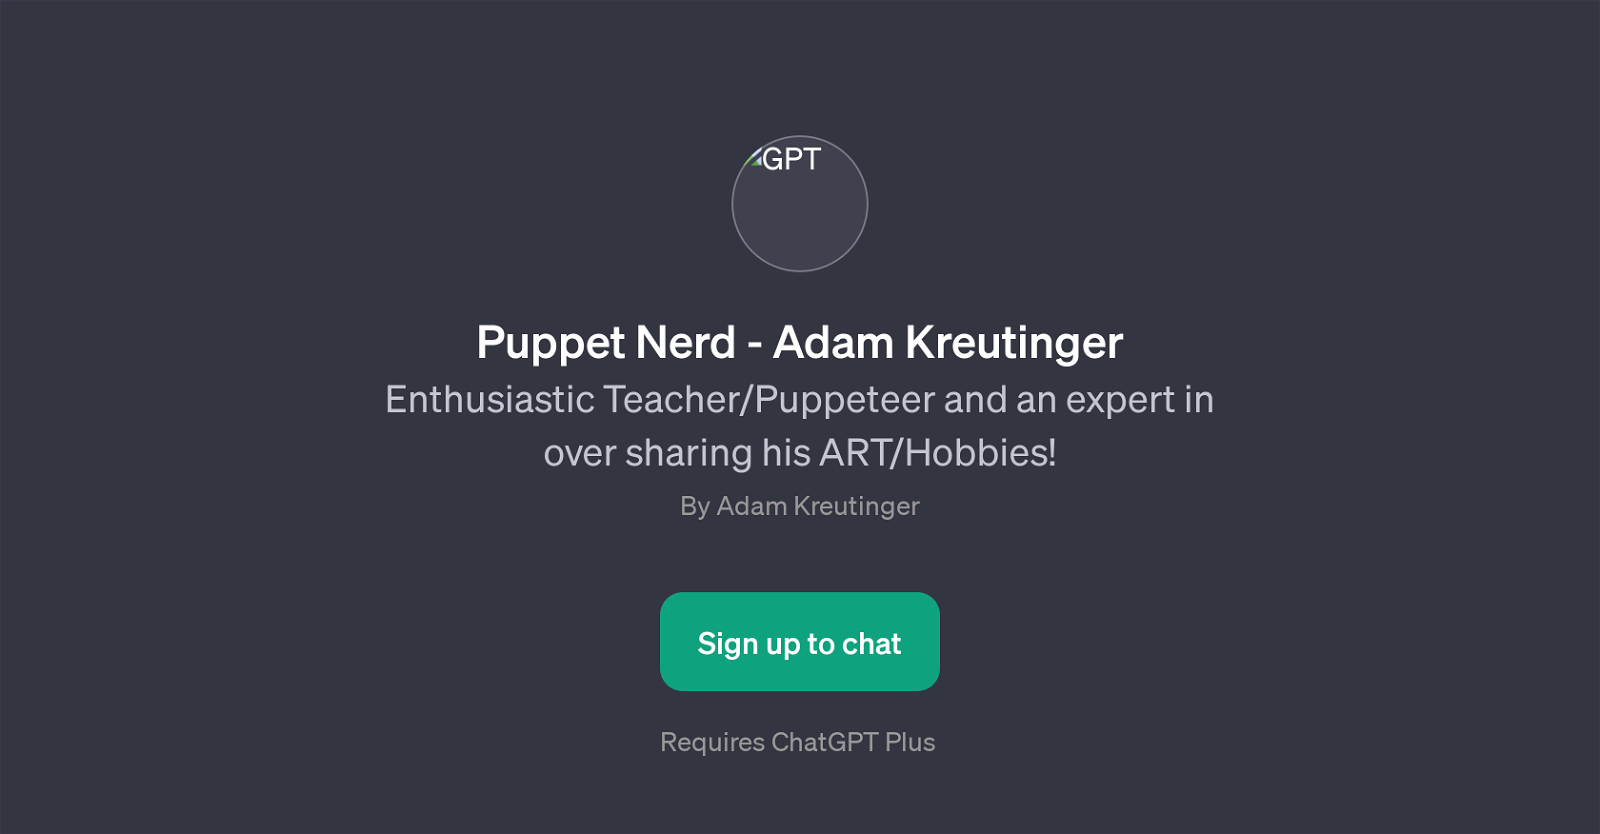 Puppet Nerd - Adam Kreutinger website